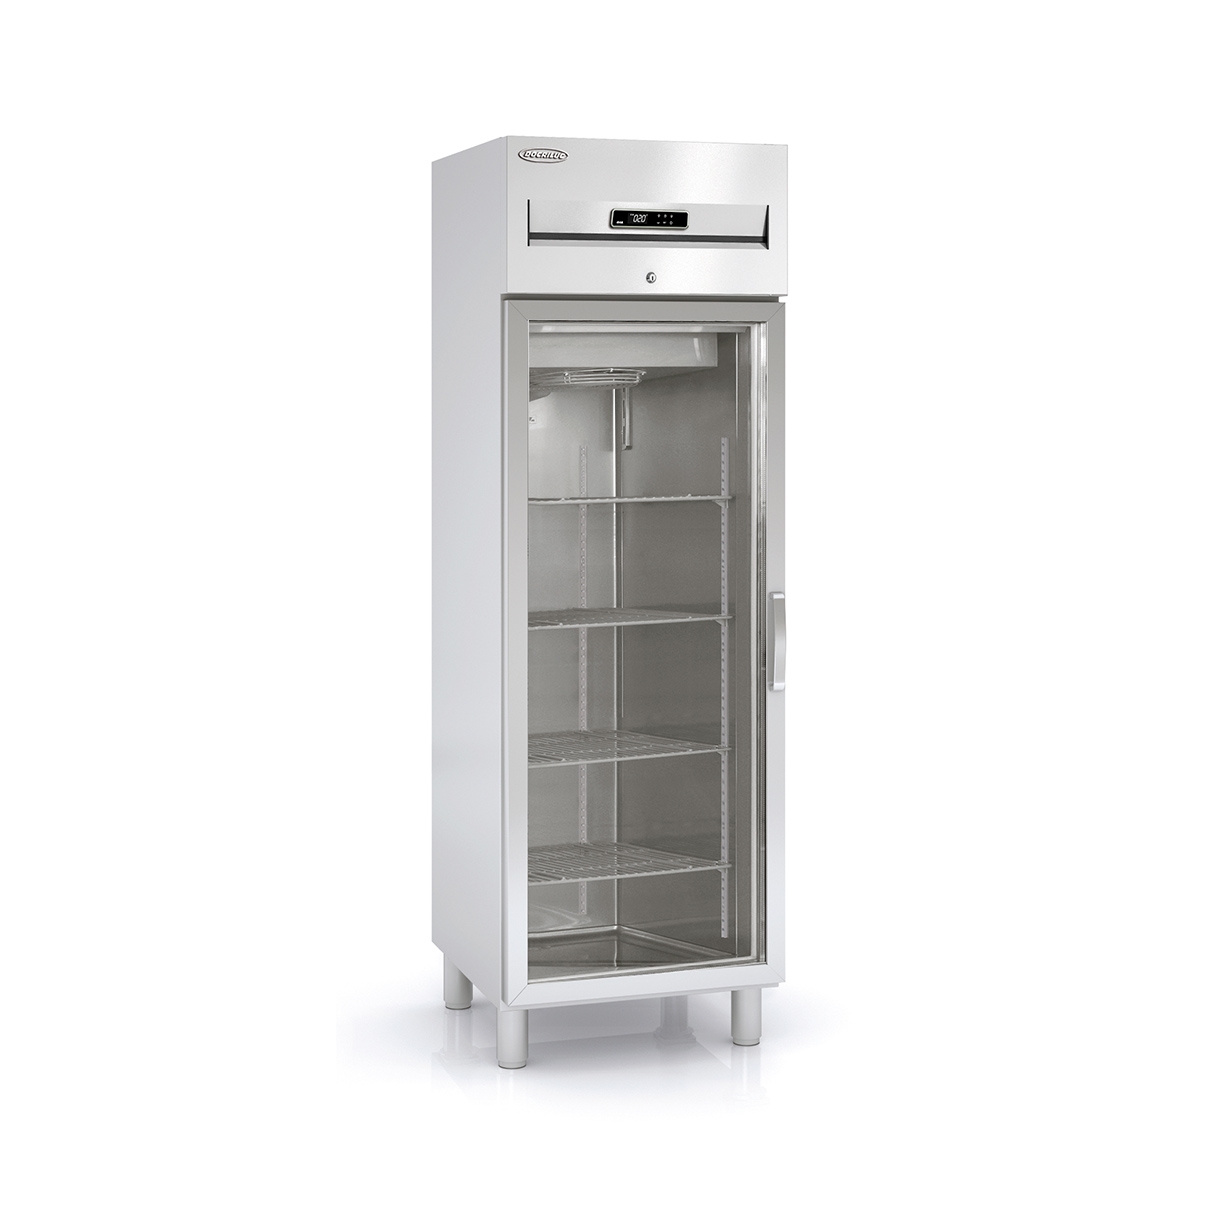 Euro Snack Refrigerated Cabinet DAERE-401